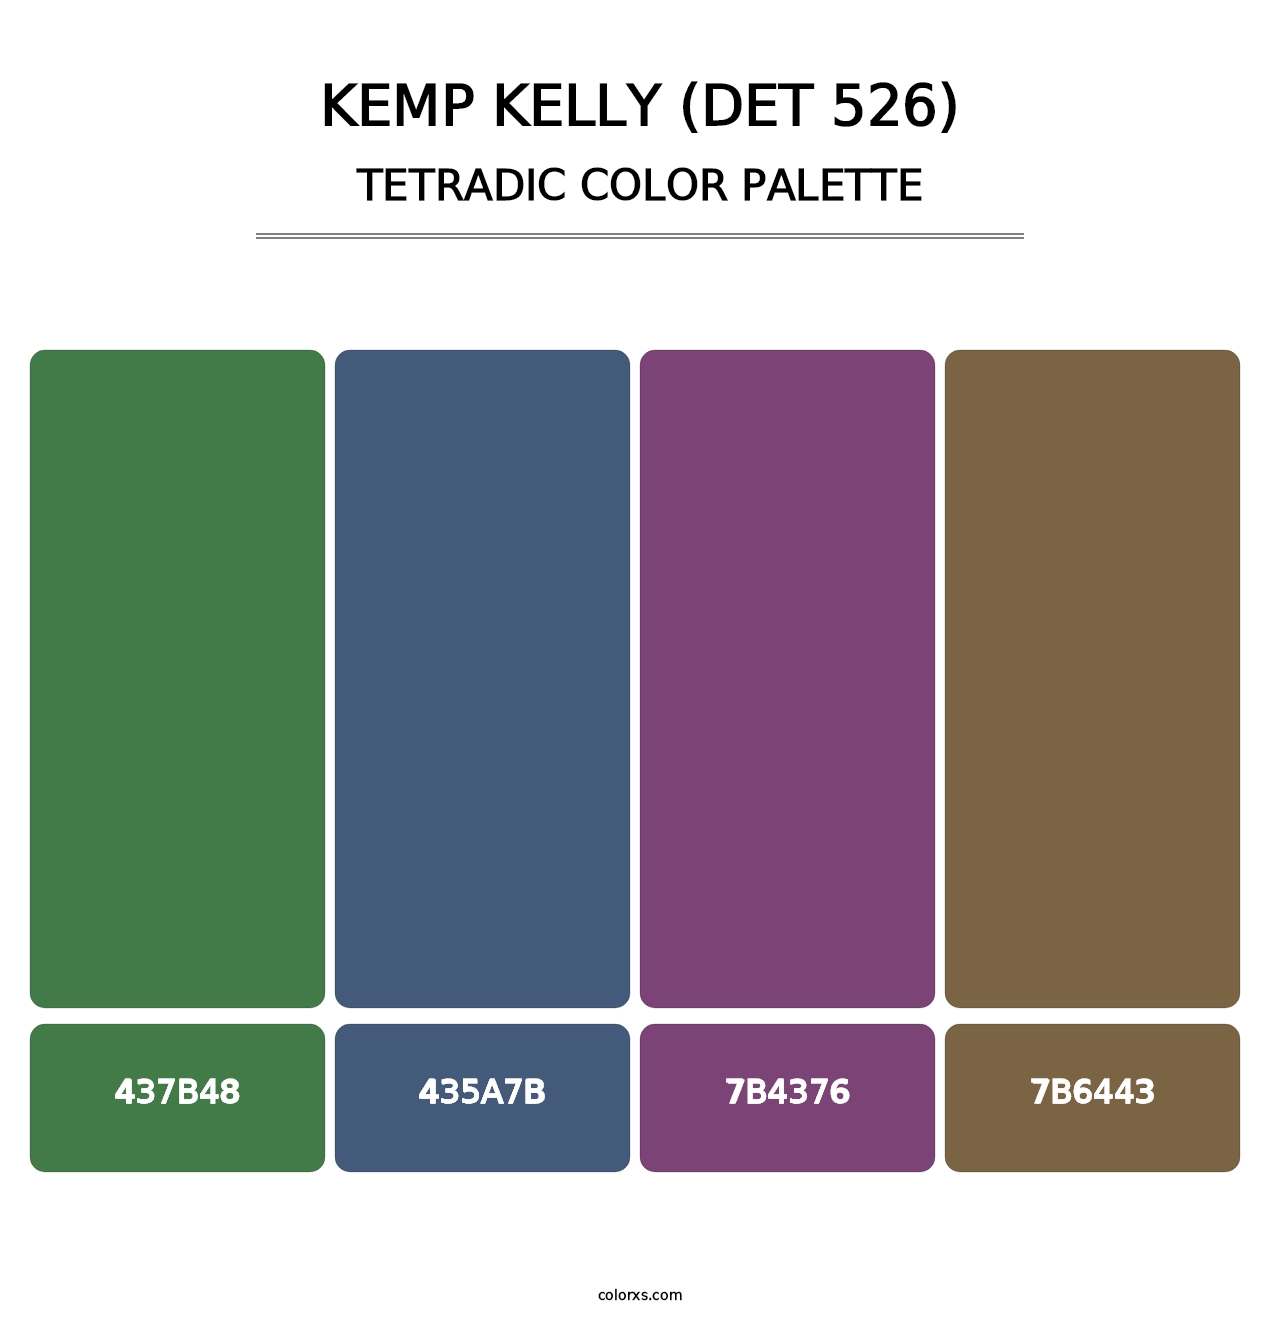 Kemp Kelly (DET 526) - Tetradic Color Palette